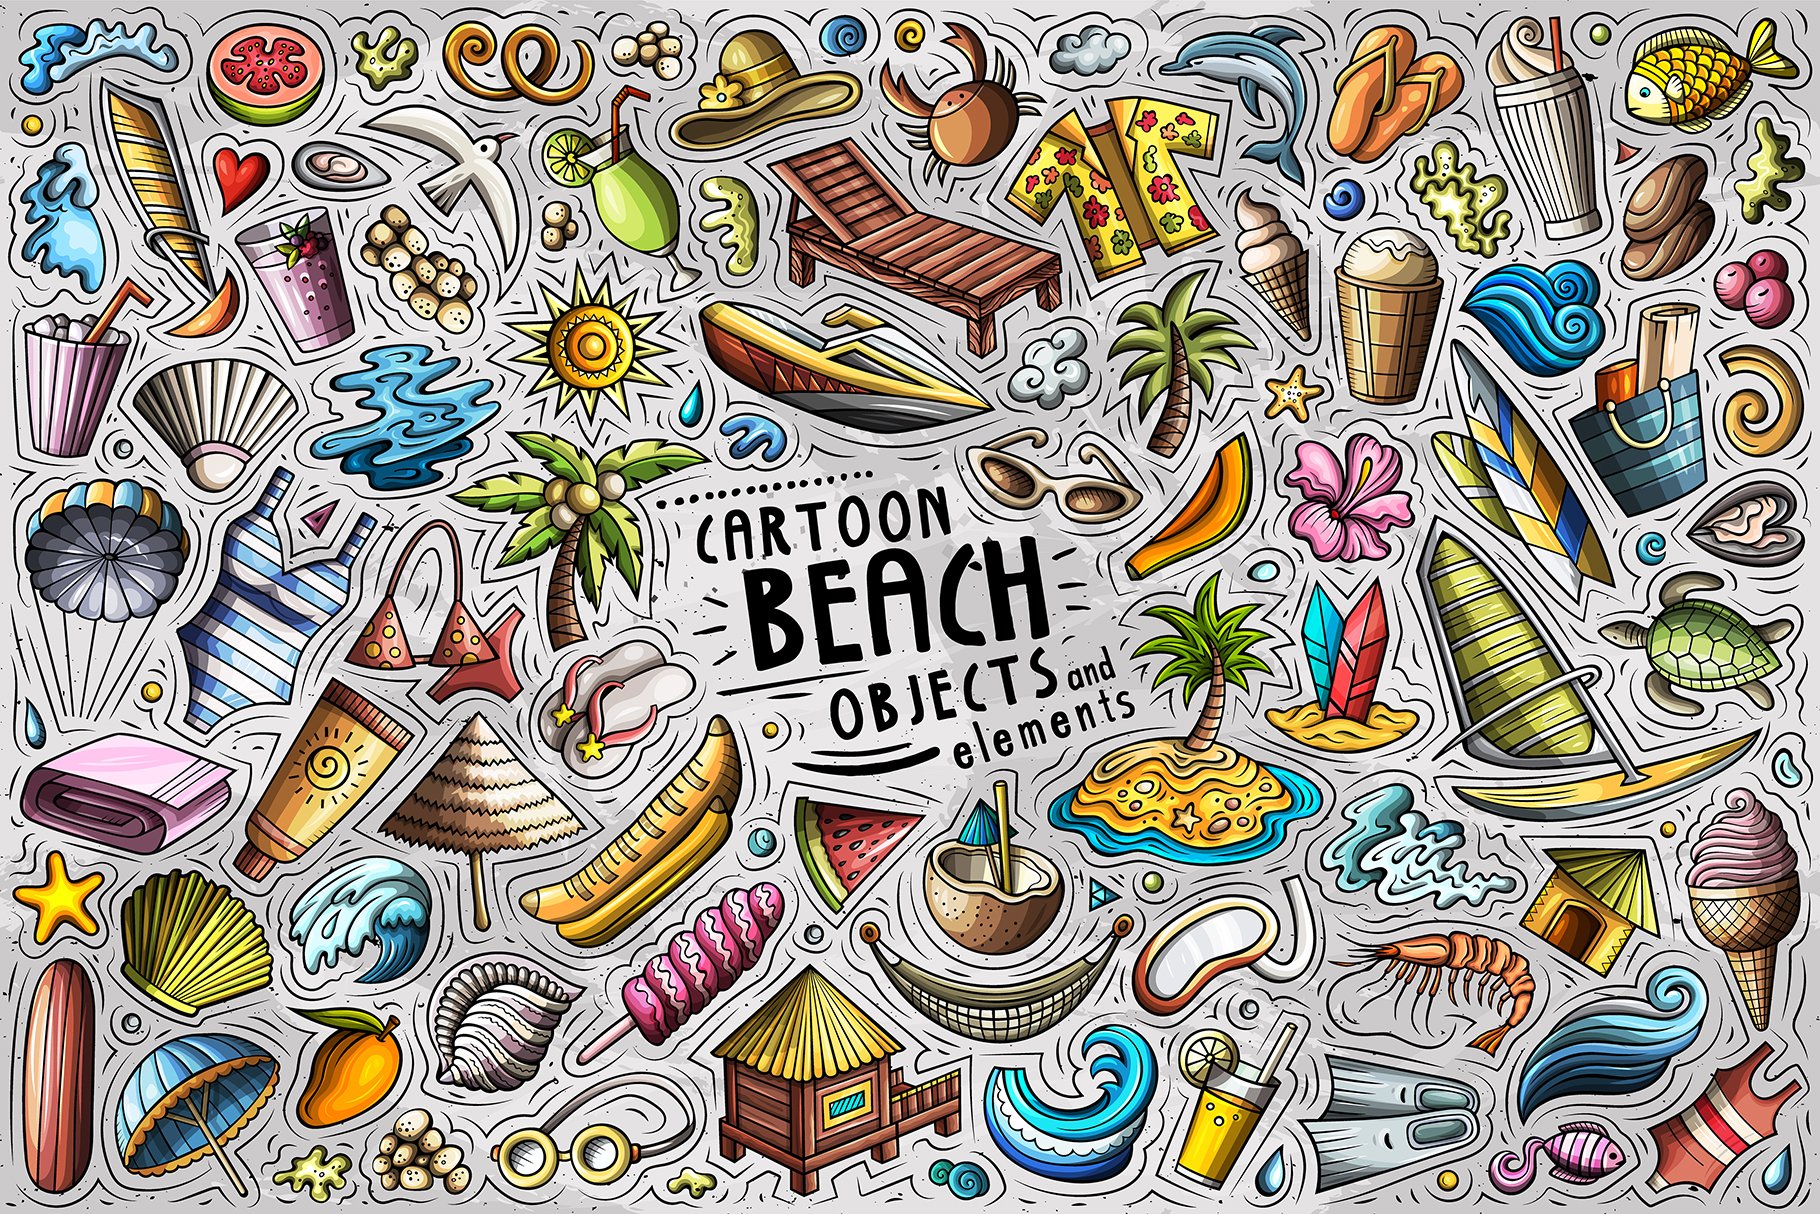 Summer Beach Cartoon Objects Set cover image.